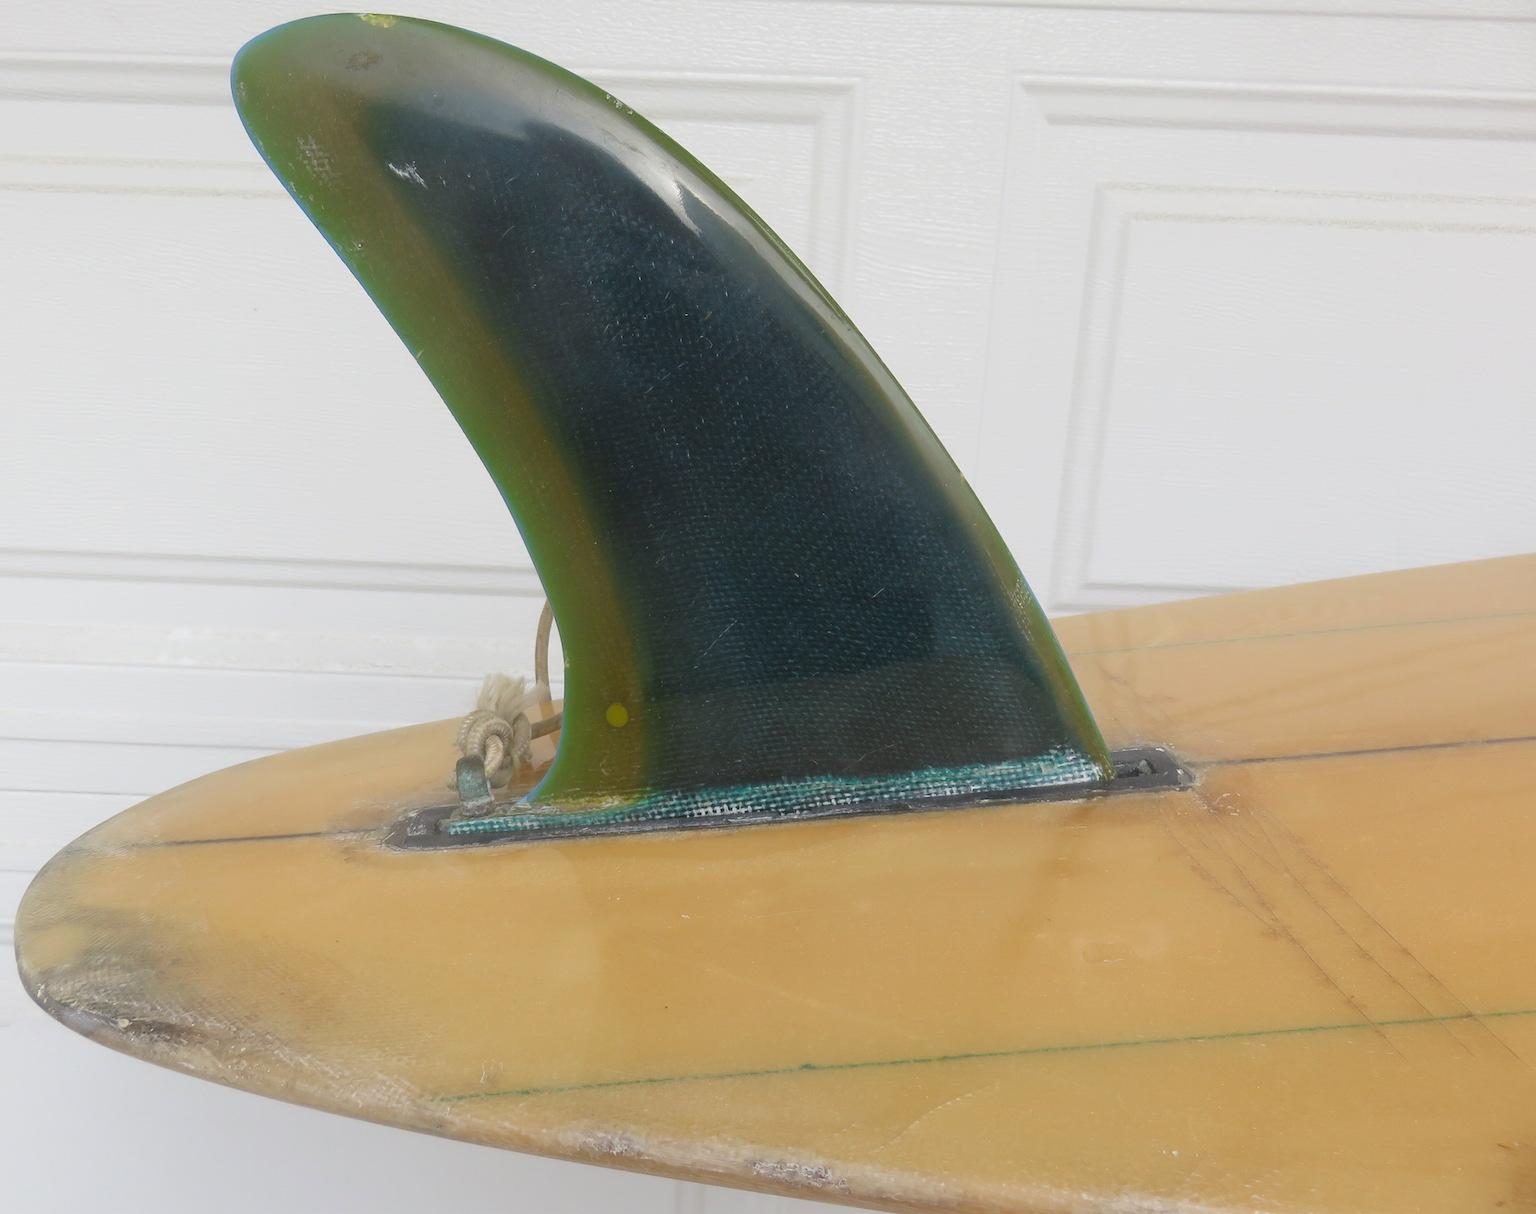 zephyr surfboard for sale